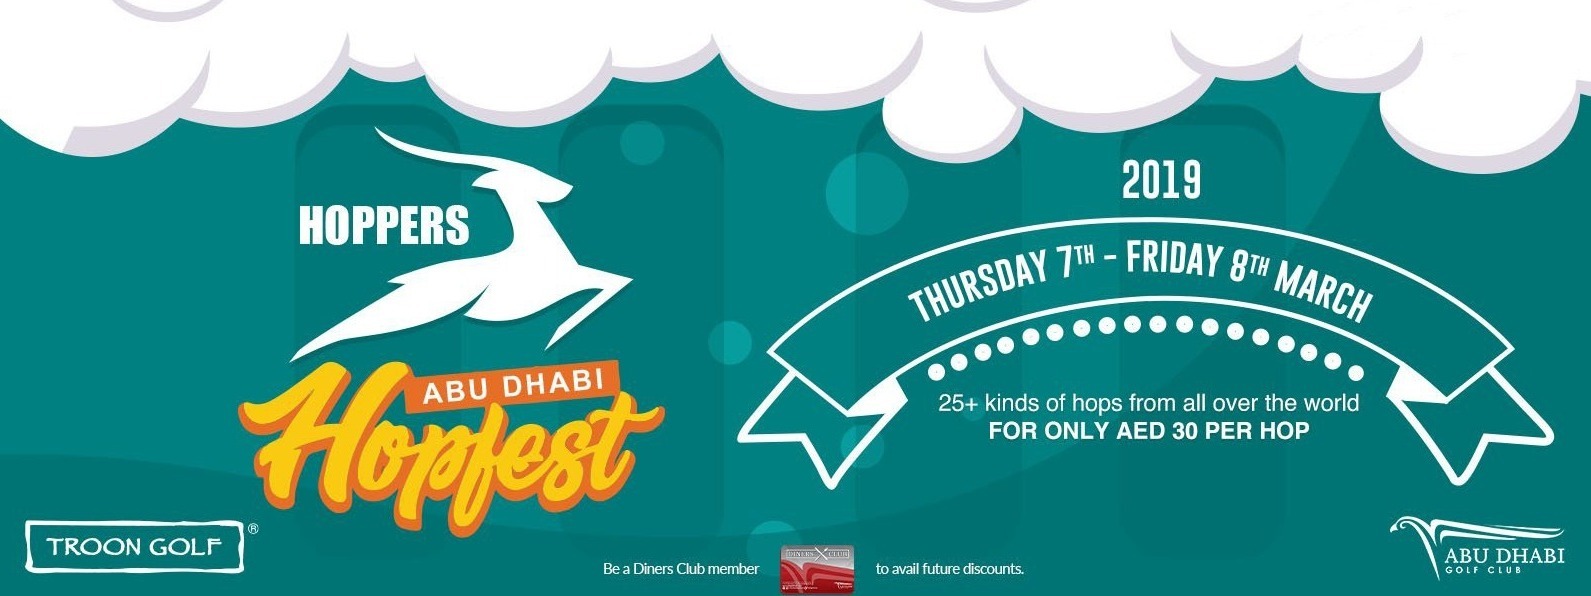 Abu Dhabi Hopfest 2019 - Coming Soon in UAE